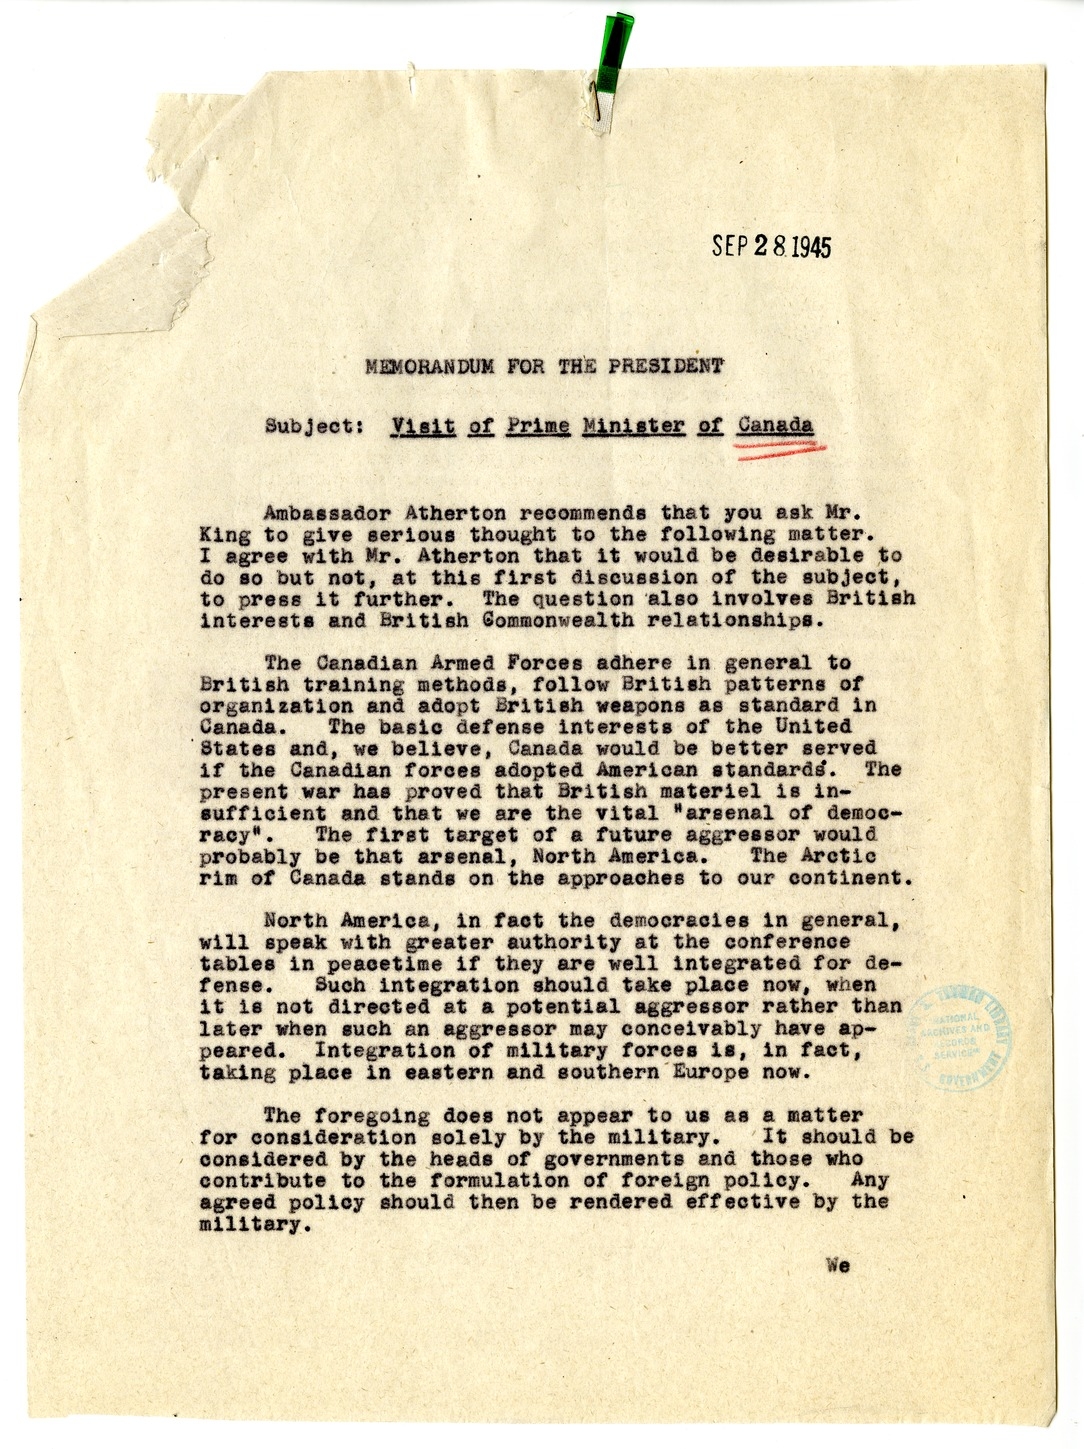 Memorandum from Dean Acheson to President Harry S. Truman, with Attached Memorandum